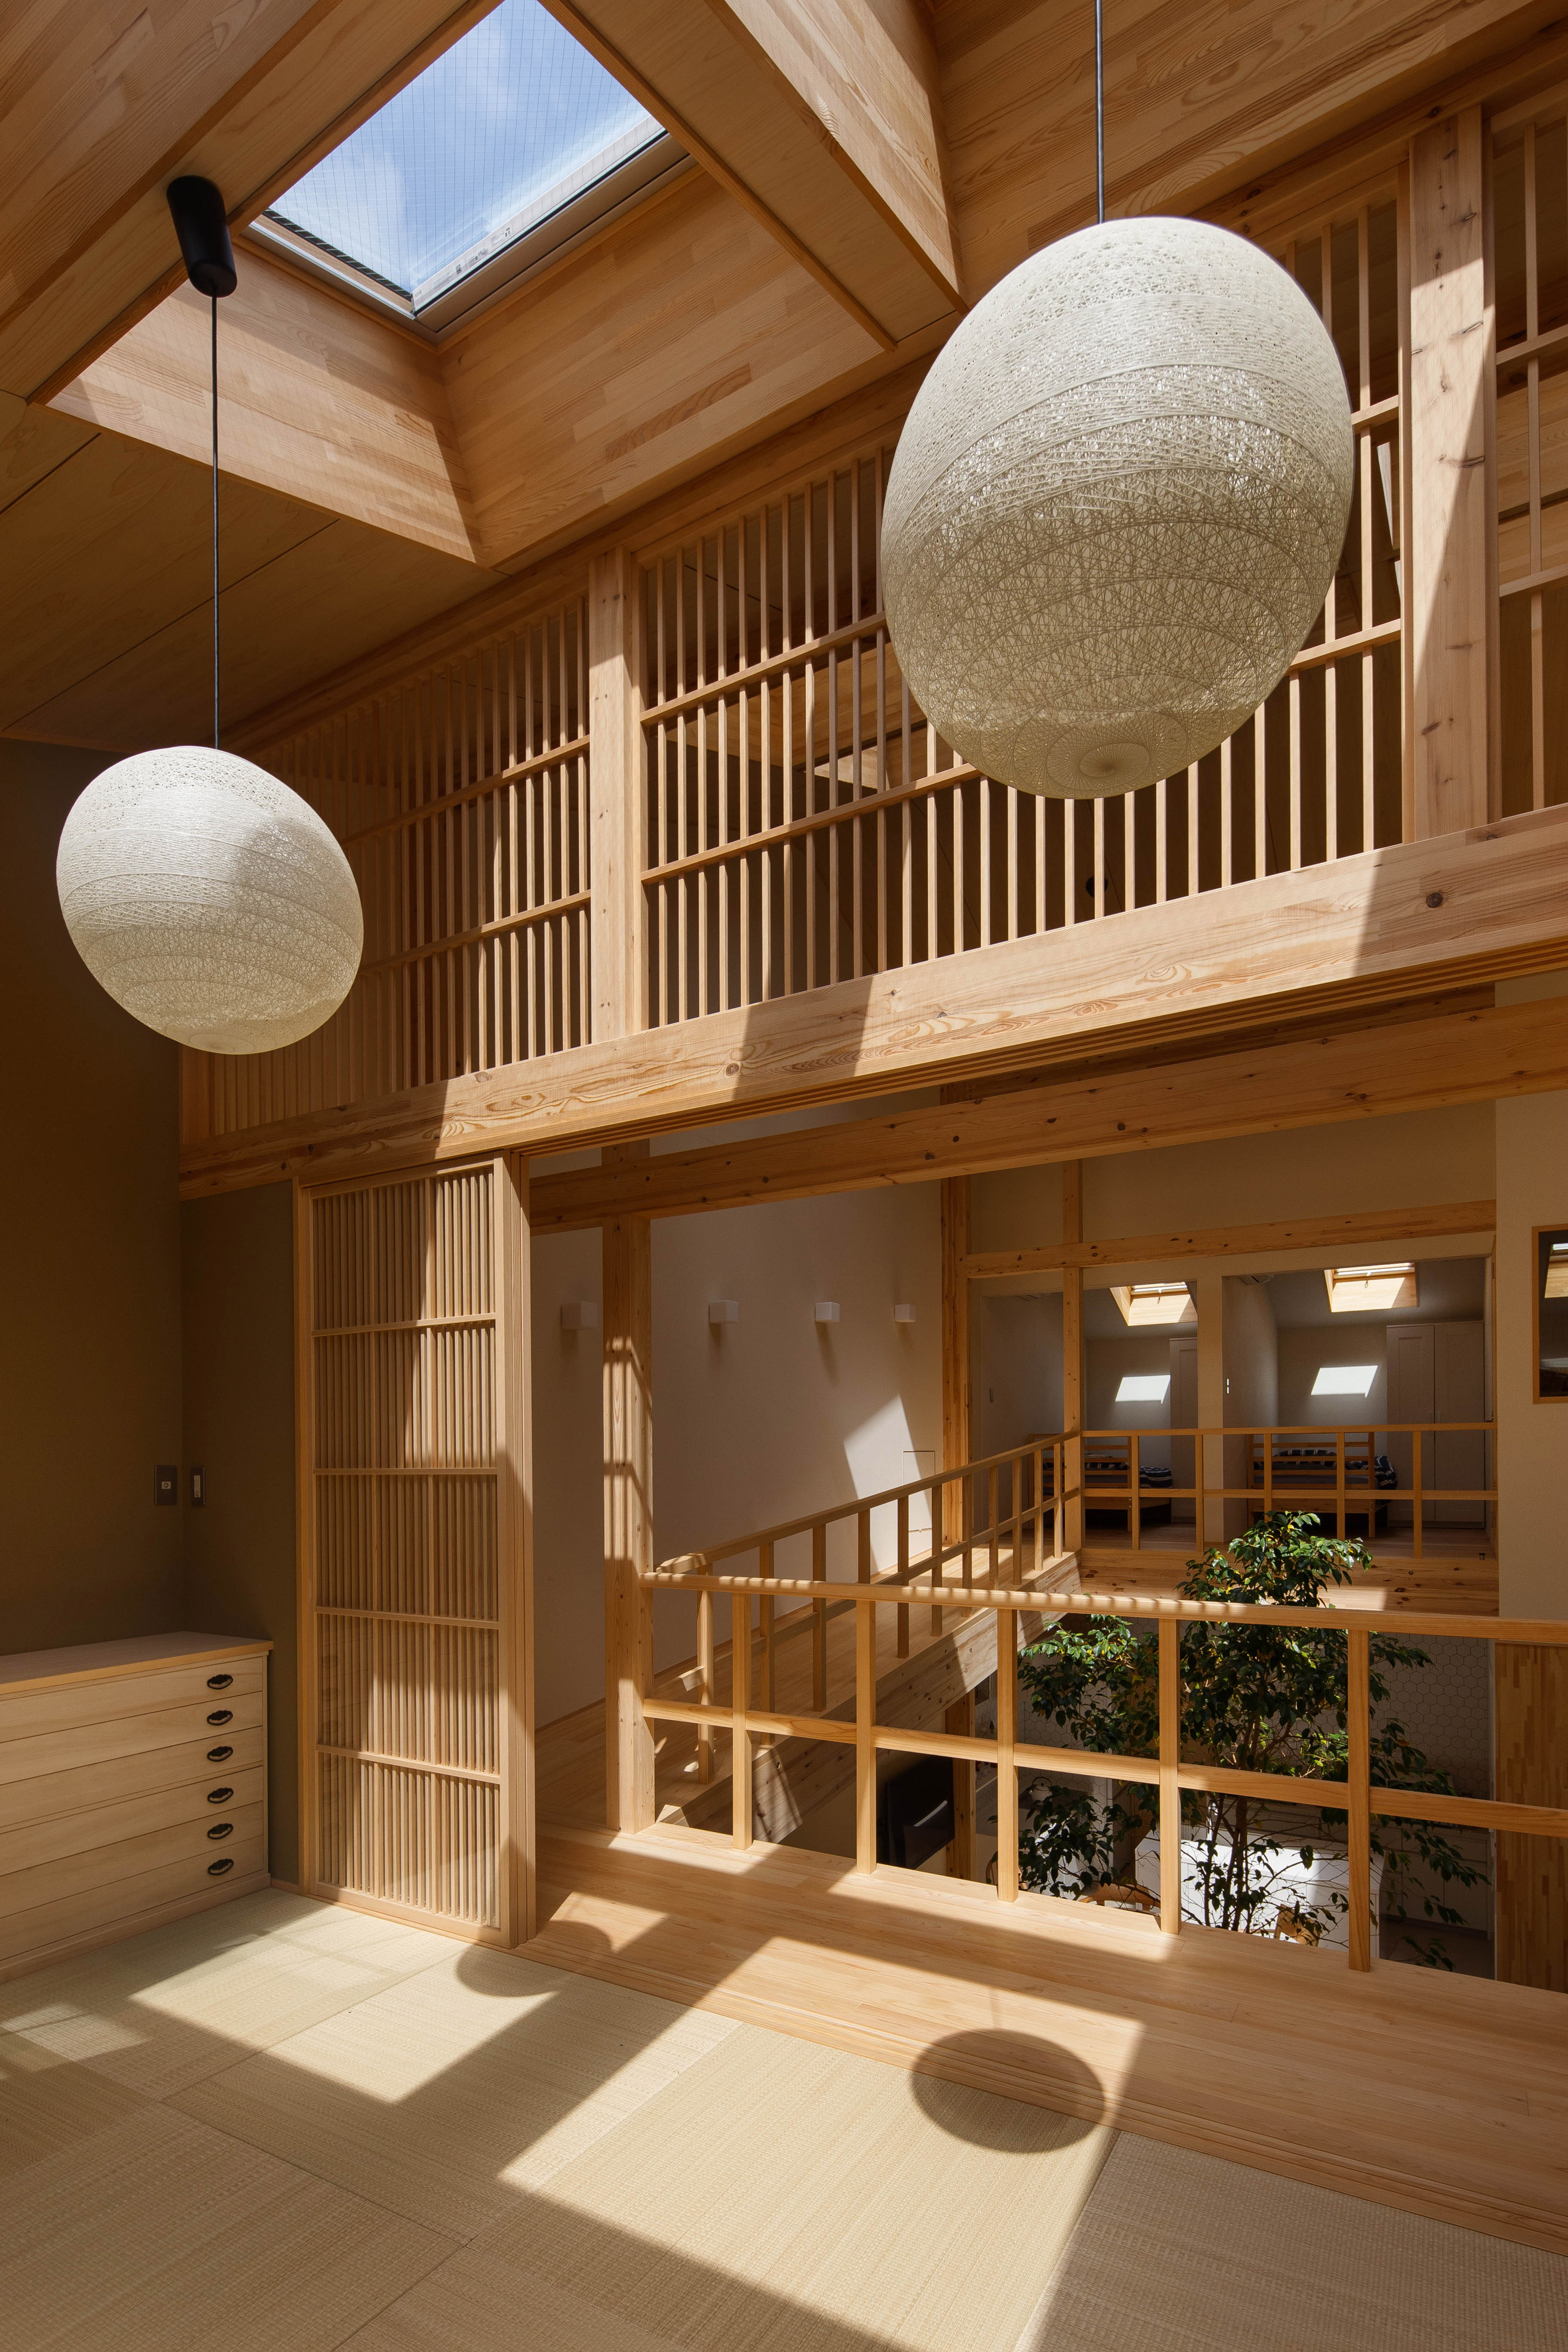 07Beach arrange Kyoto home around glass-fronted bathroom